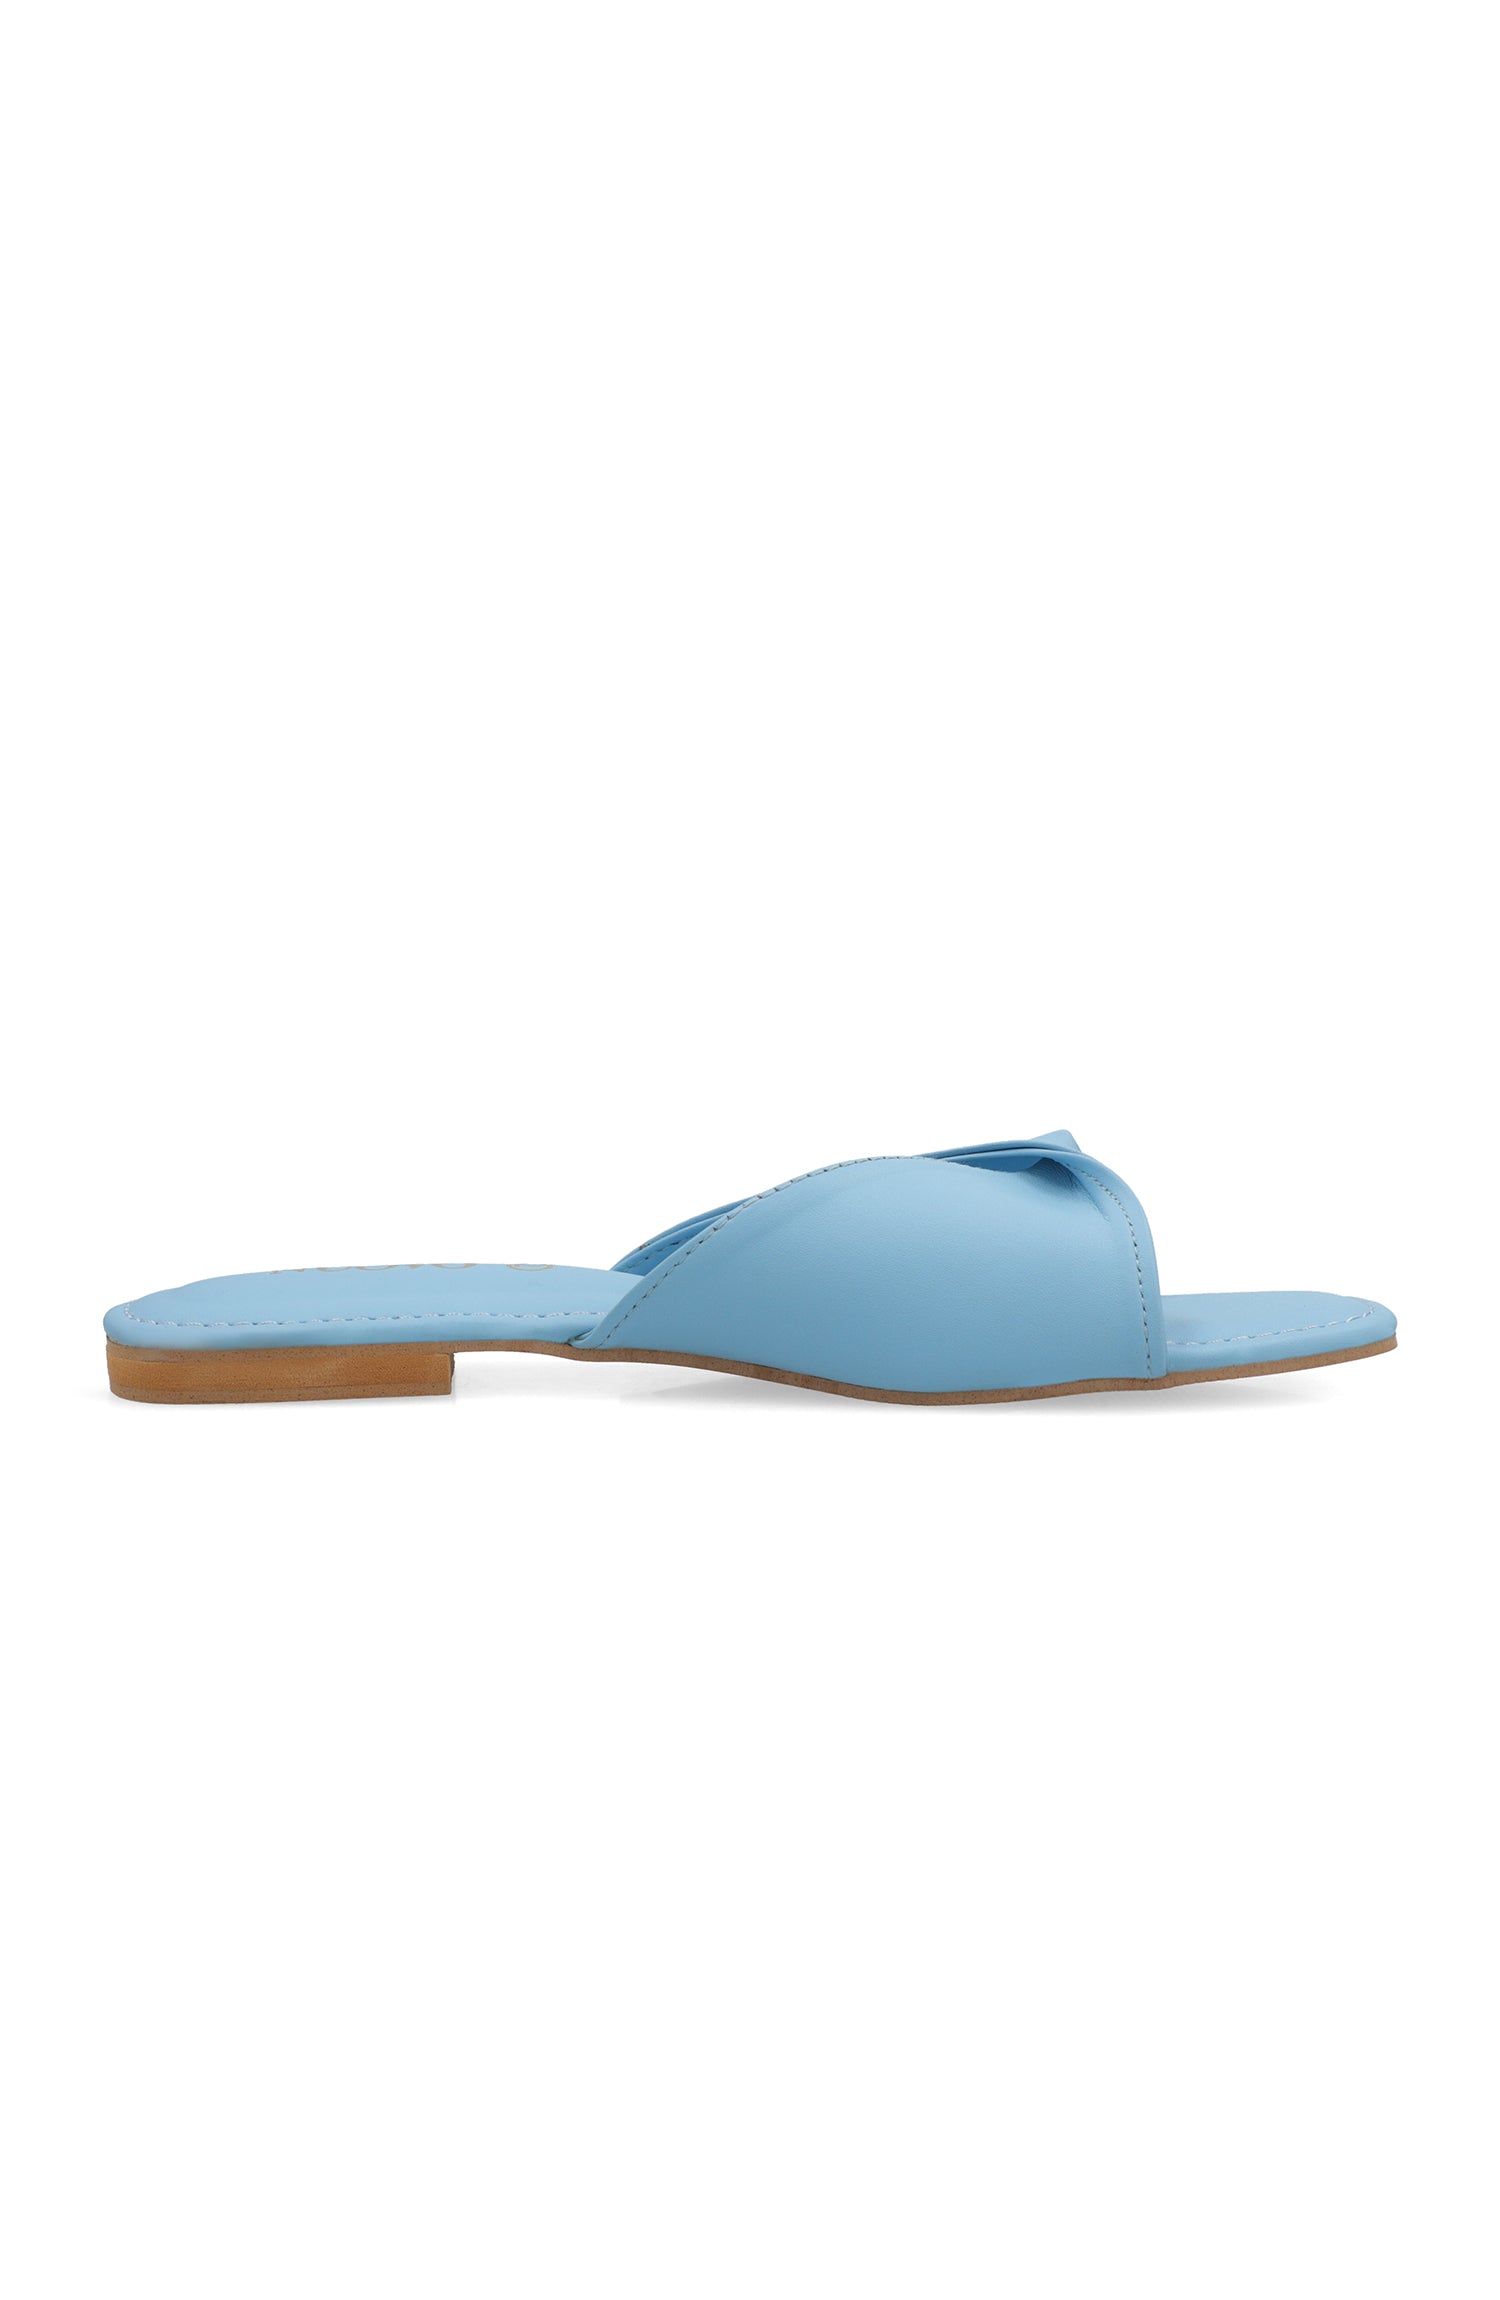 Women Slippers -  BLUE (ORFS-86 SKY BLUE)